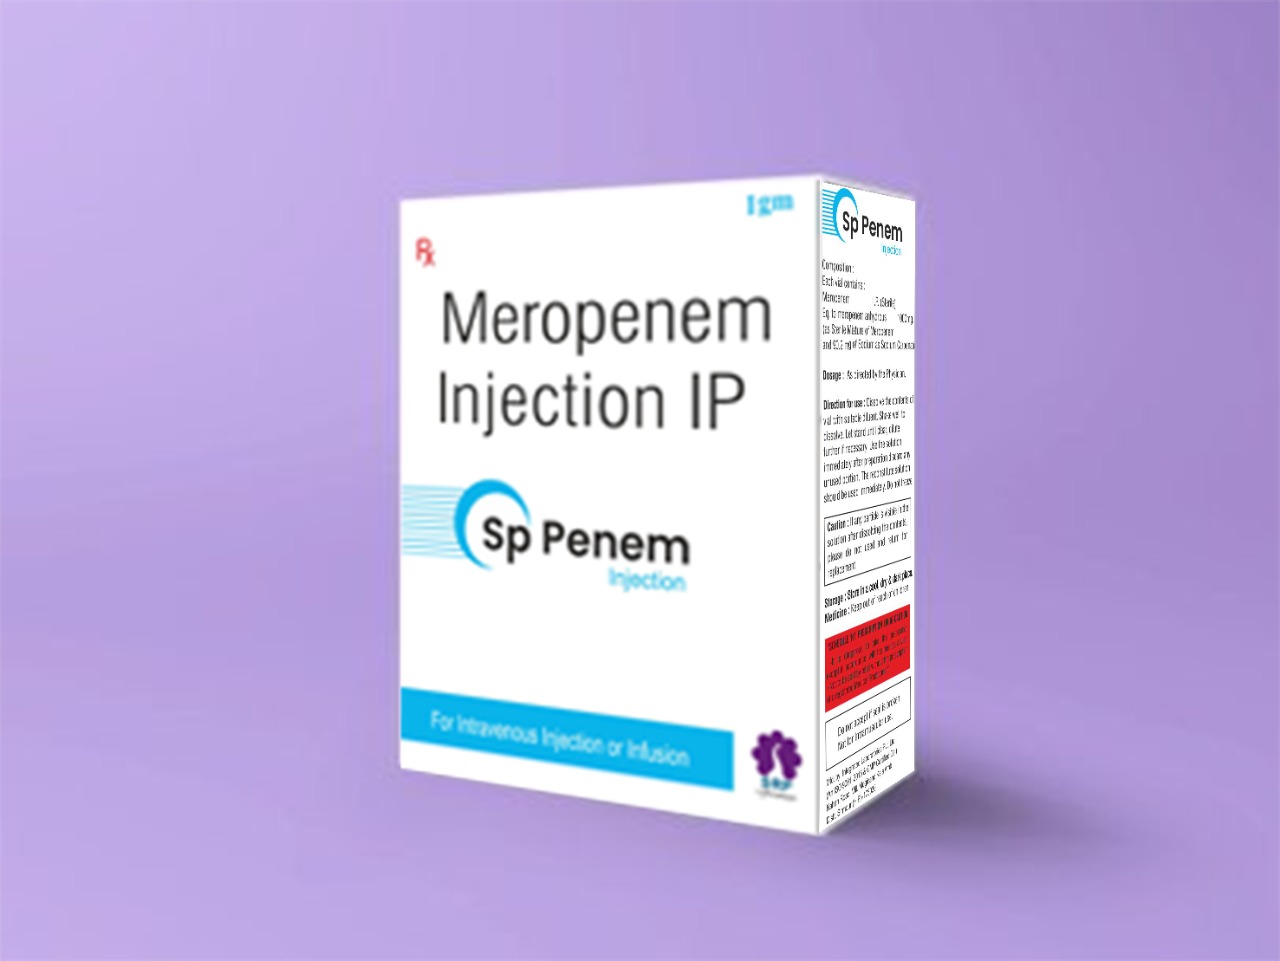 Product Name: sp penem , Compositions of sp penem  are meropenem injecton - Cynak Healthcare